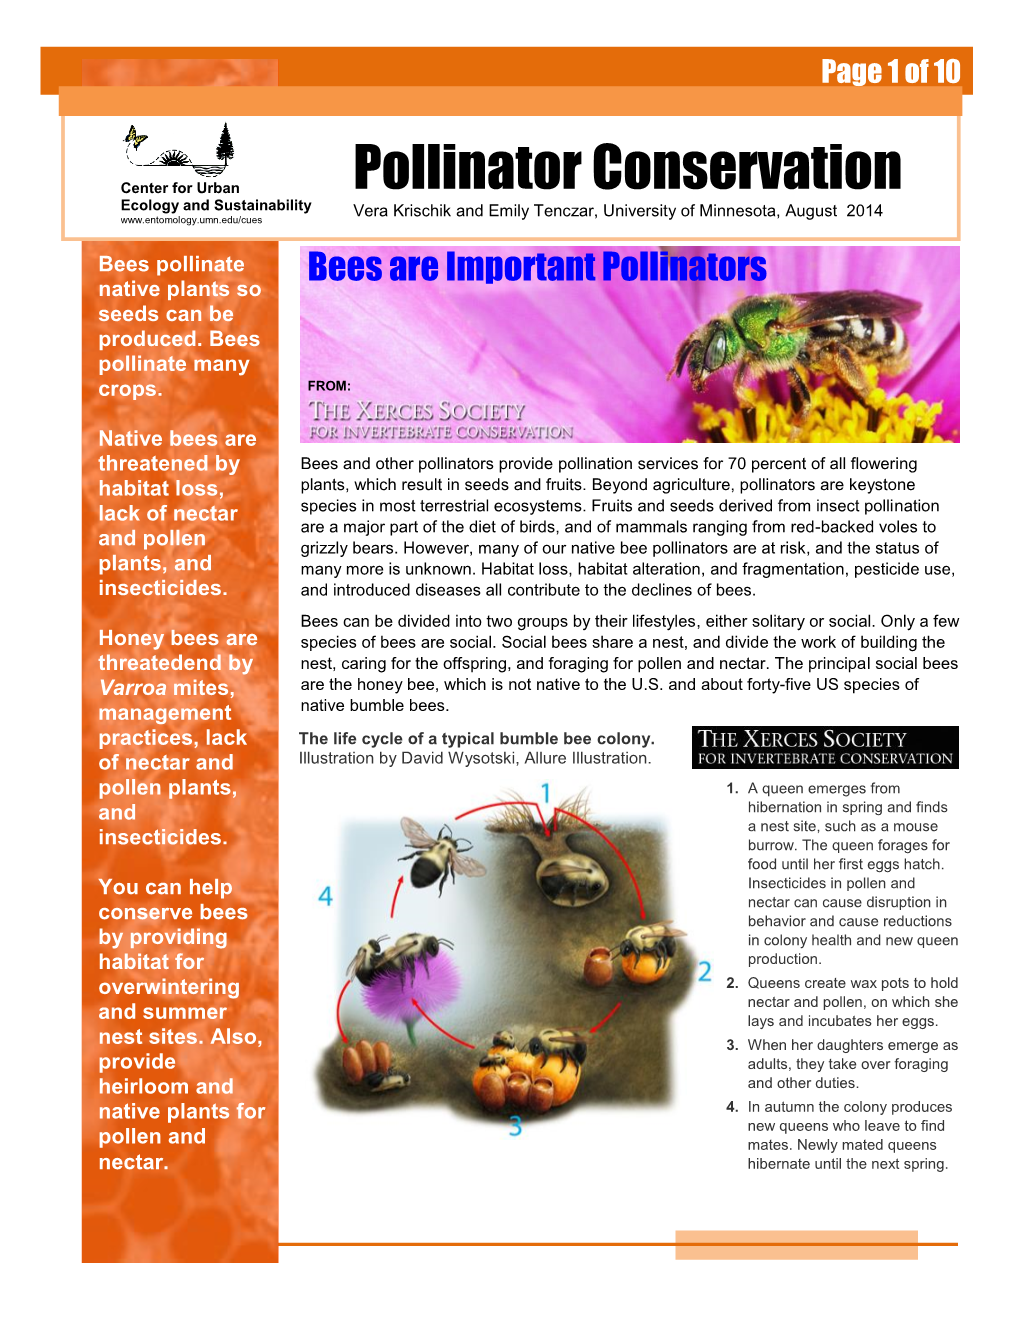 Krischik, Vera A. and E. Tenczar. 2014. Pollinator Conservation